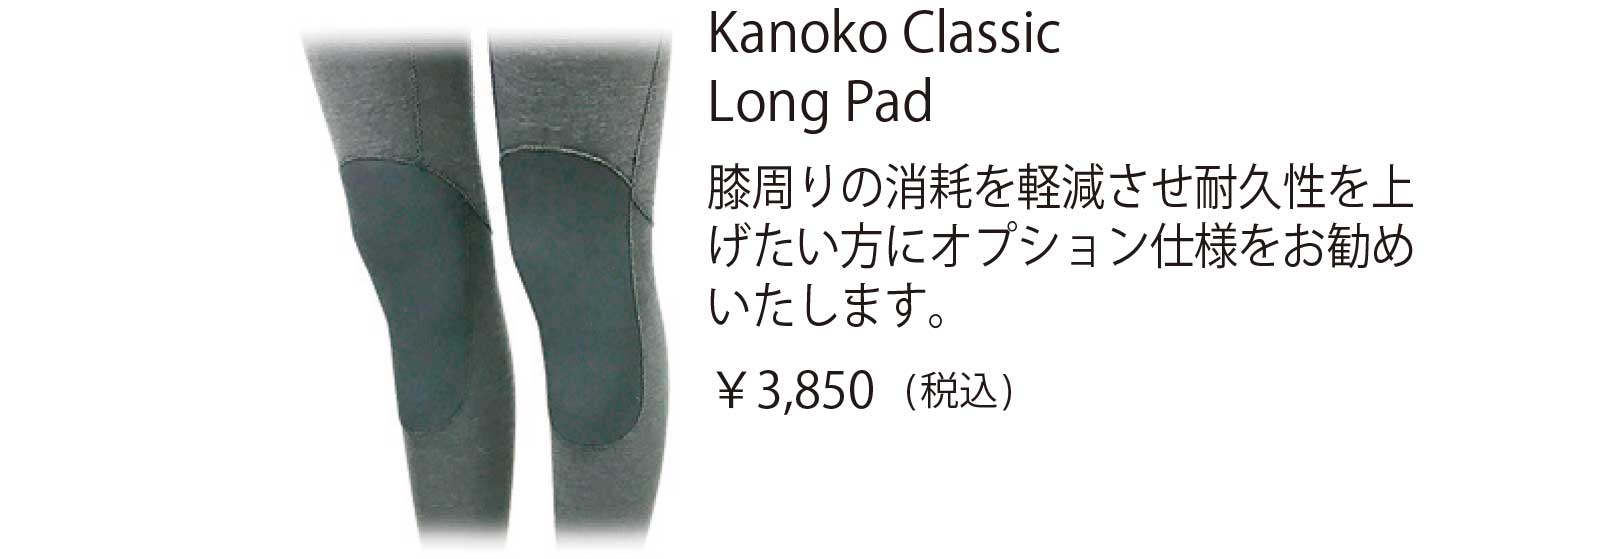 Kanoko Classic Long Pad 膝周りの消耗を軽減させ耐久性を上 げたい方にオプション仕様をお勧め いたします。